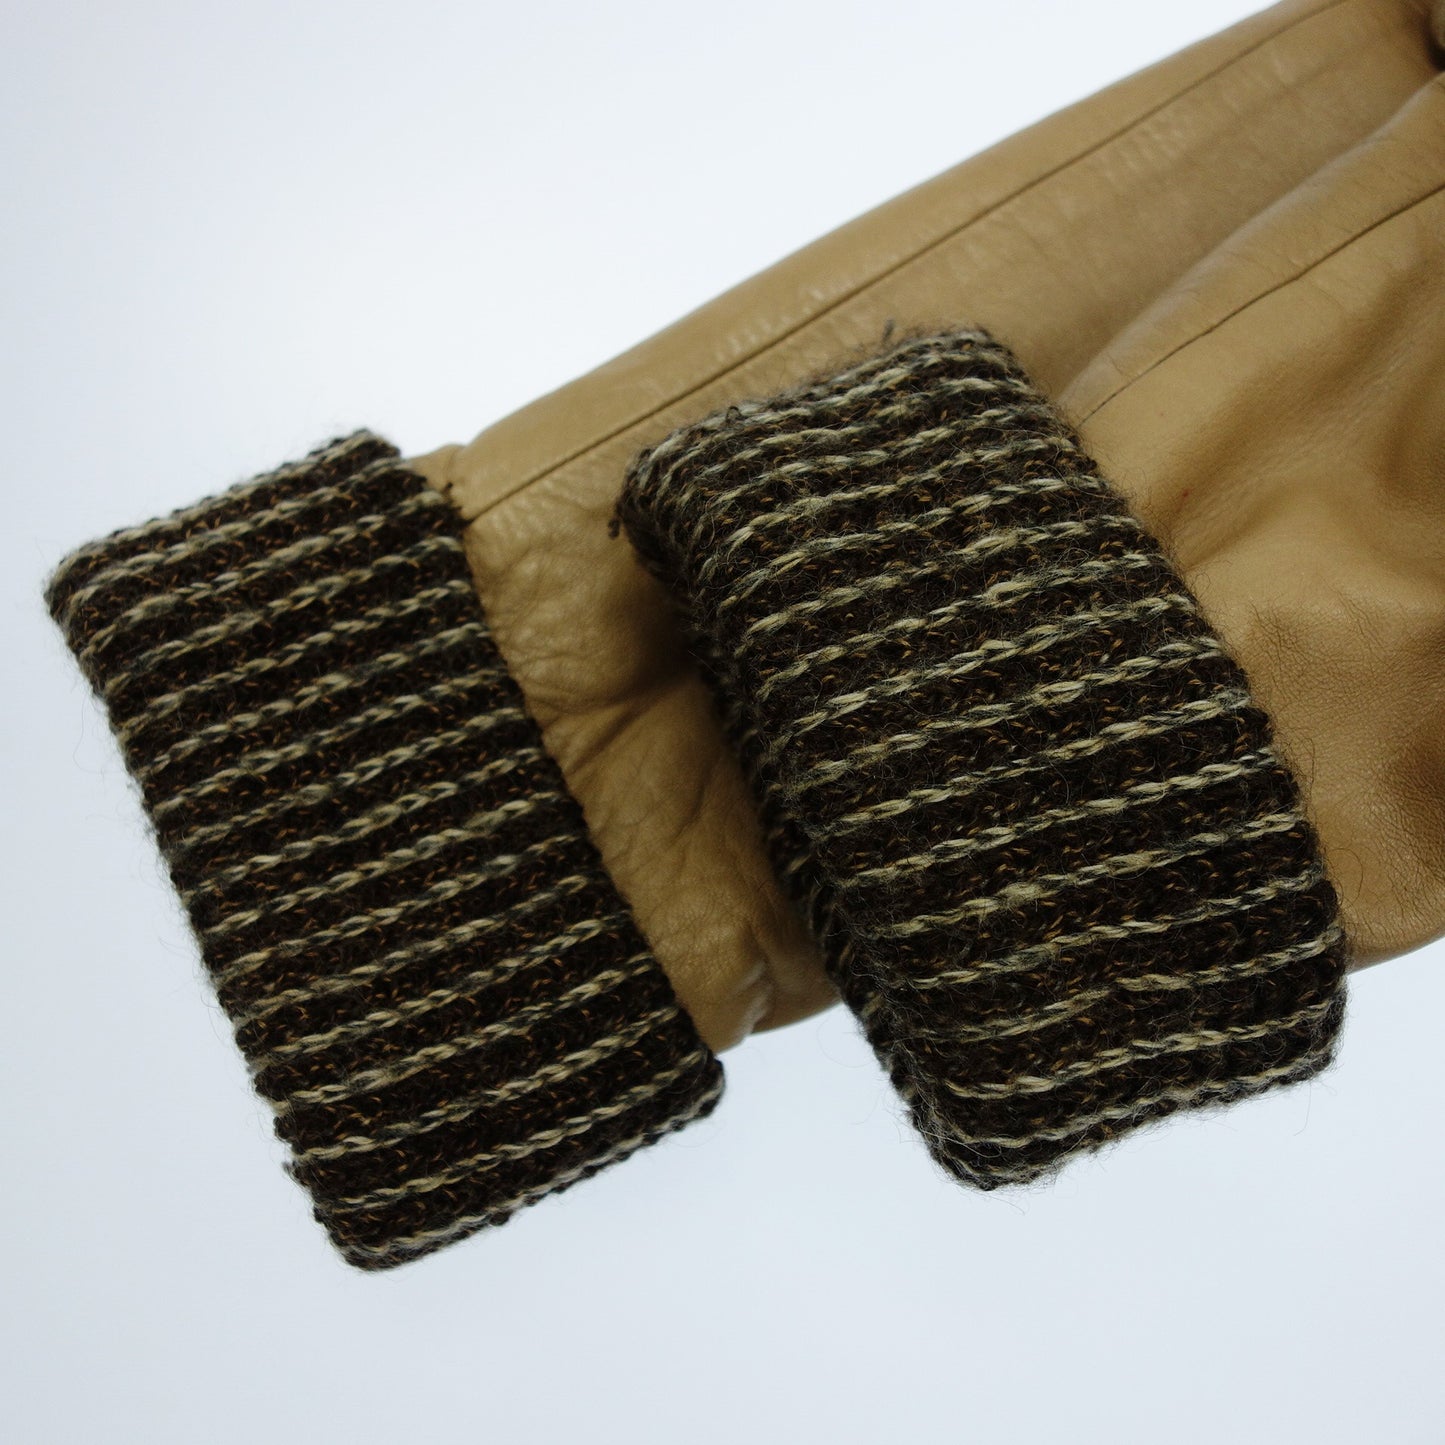 LOEWE Long Coat Leather Anagram Button Women's Brown LOEWE [AFA1] [Used] 